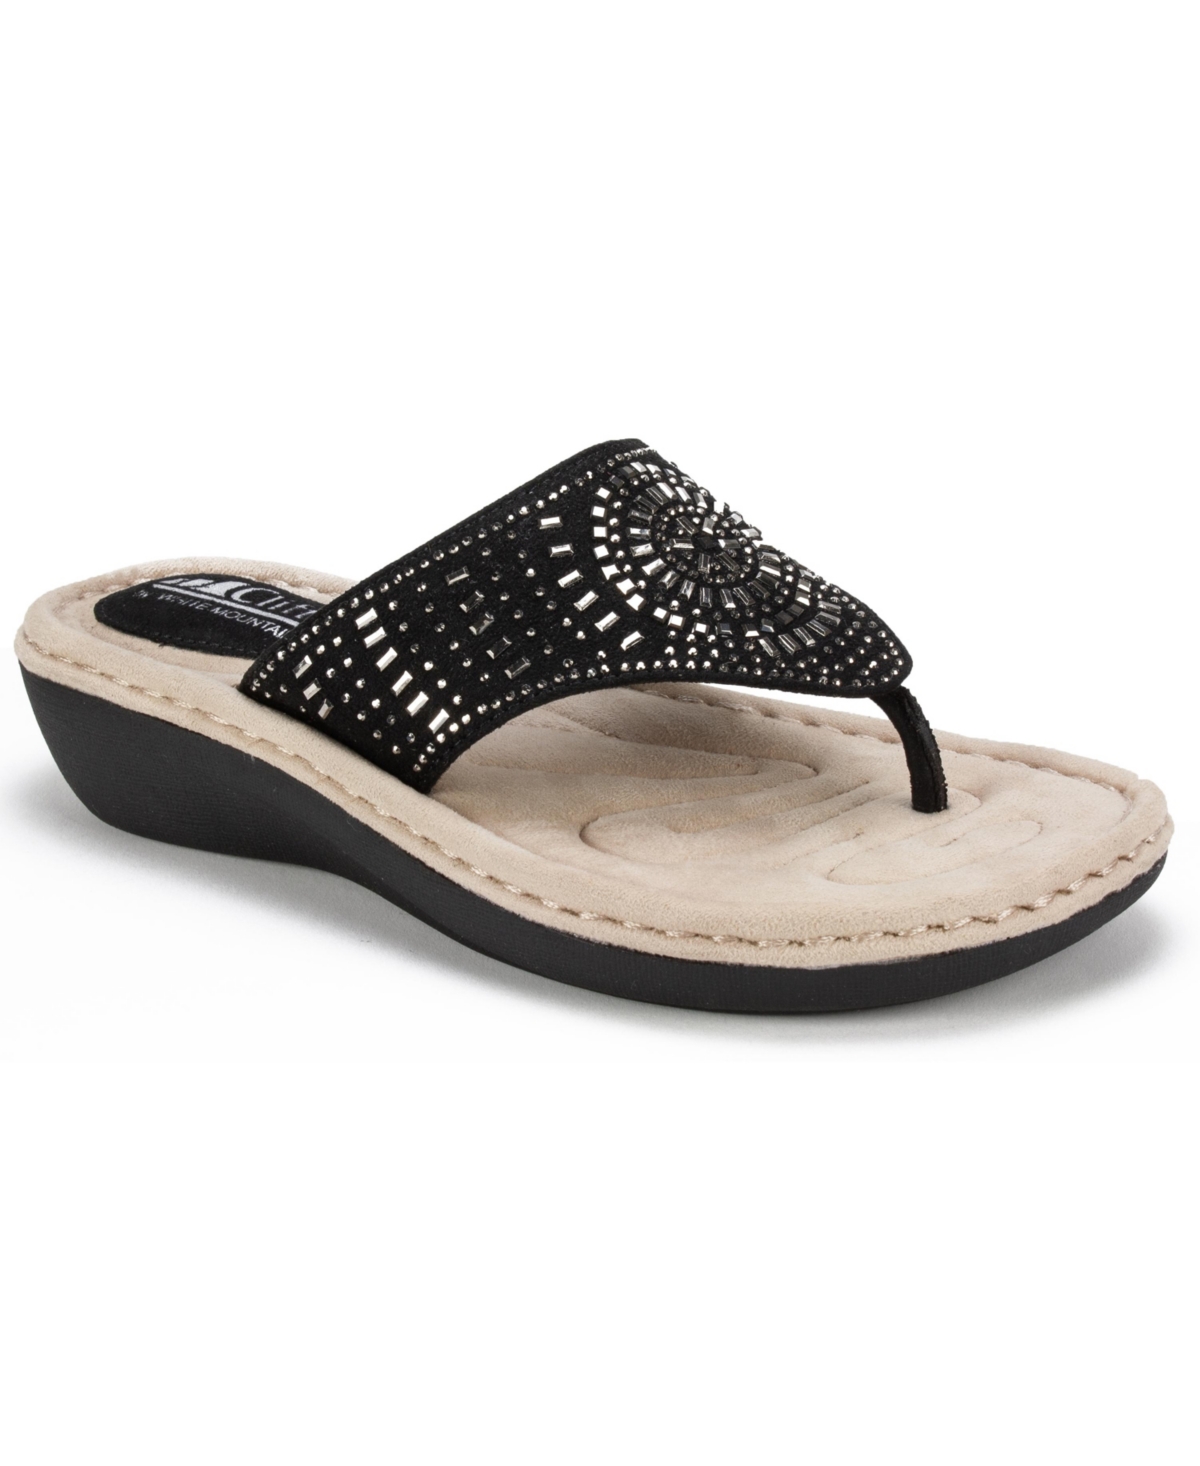 Cienna Comfort Thong Sandals - Stone Fabric